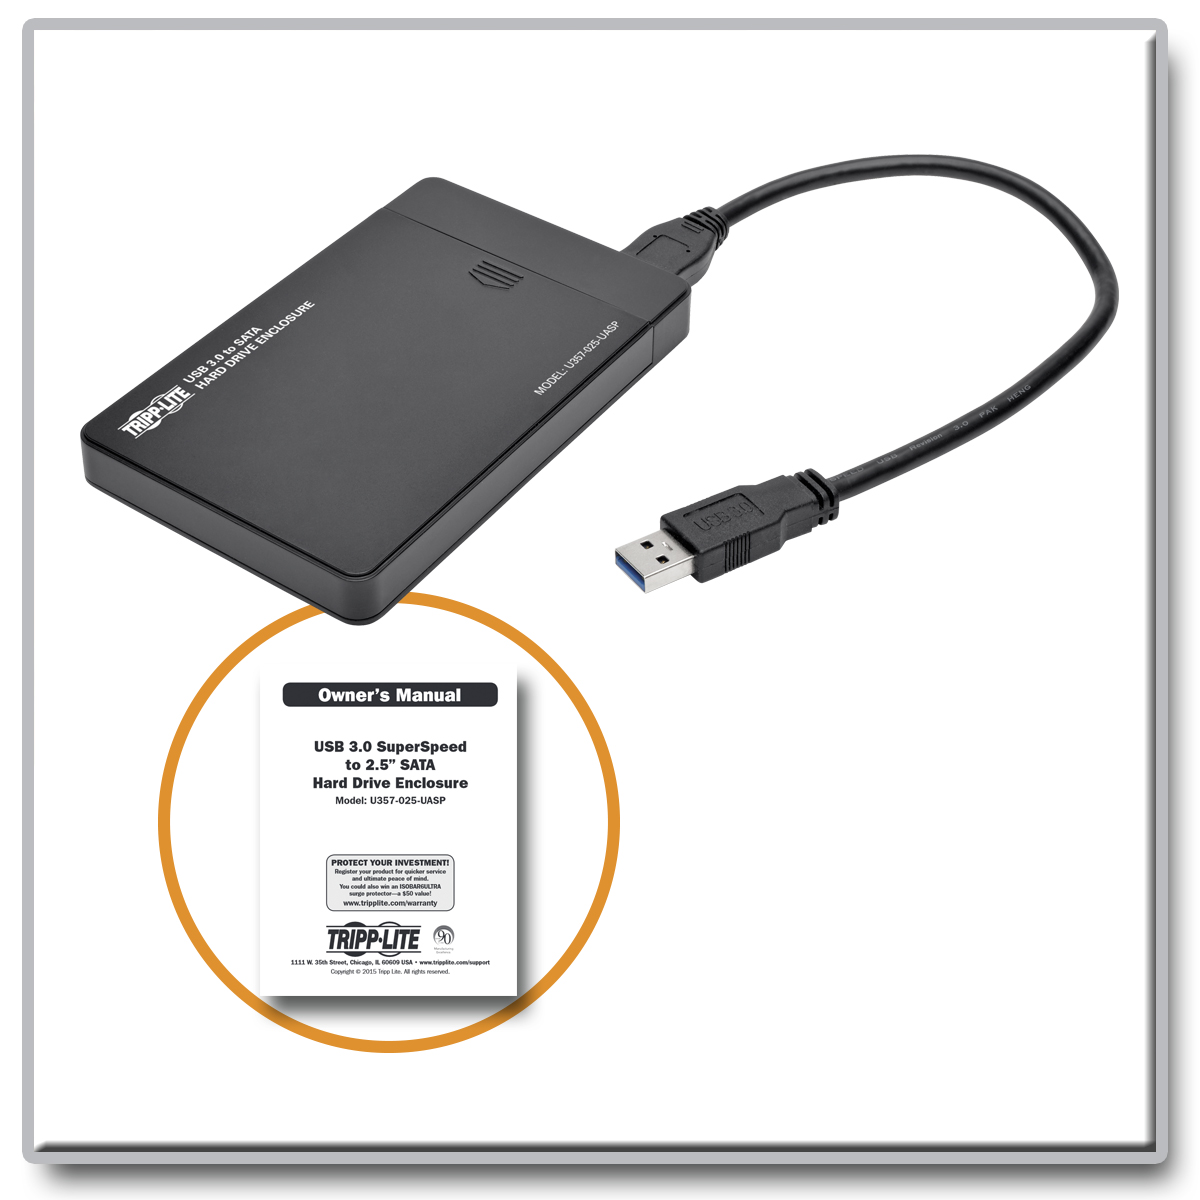 Tripp Lite USB 3.0 SuperSpeed to SATAIDE Adapter 2.53.55.25 Hard Drives  Storage controller 2.5 3.5 SATA 6Gbs USB 3.0 black for PN U360 004 R U360  412 - Office Depot